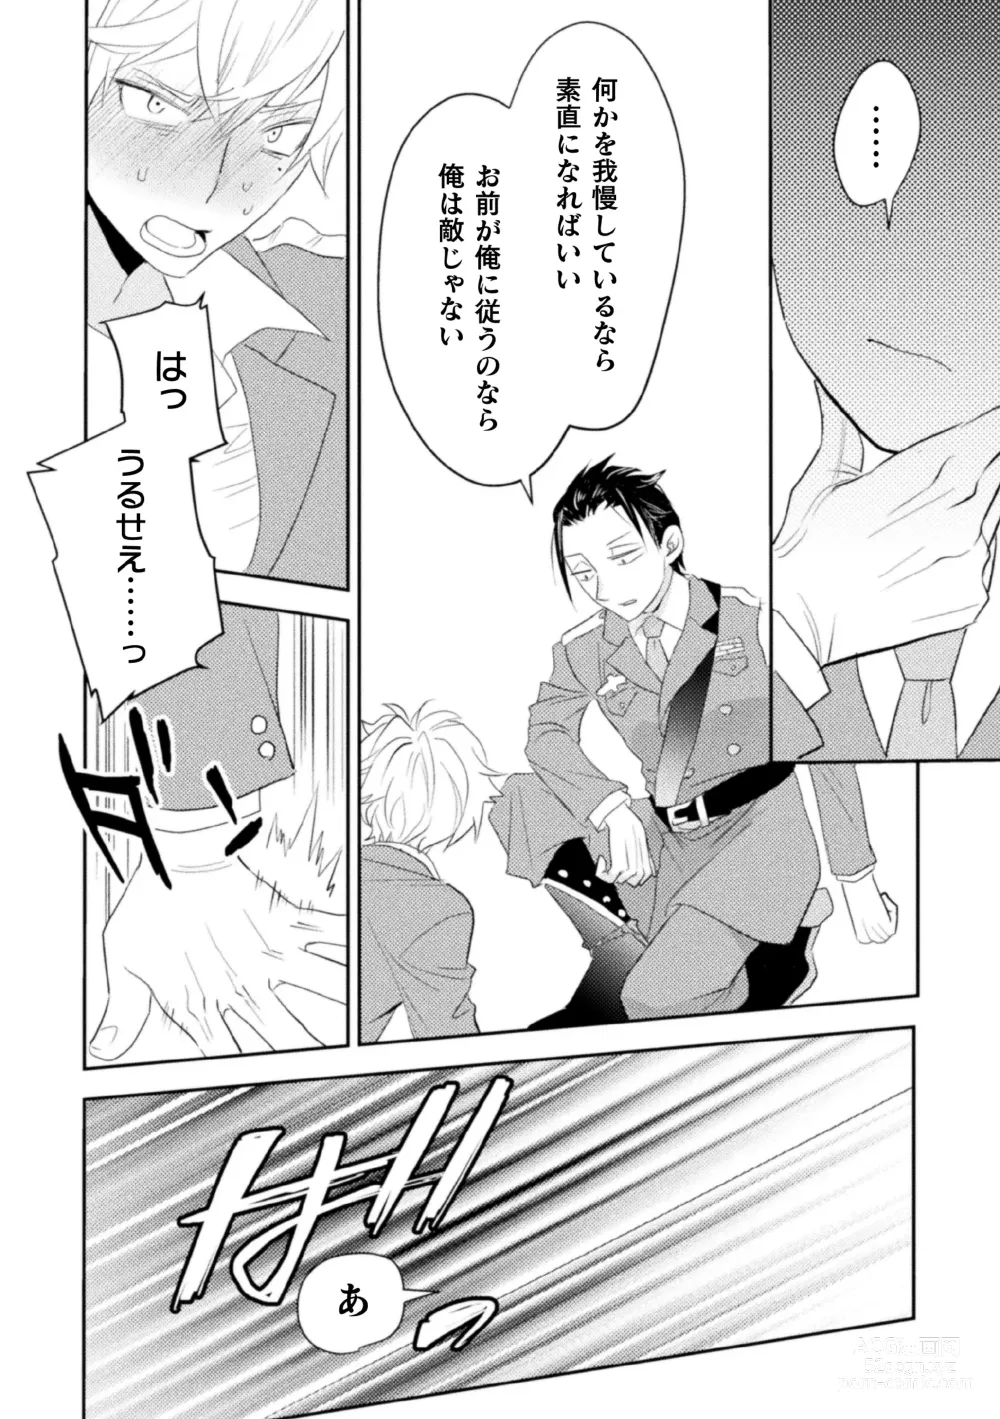 Page 26 of manga Zekkai Rougoku 4 Zekkai no Ori to Inma no Wana